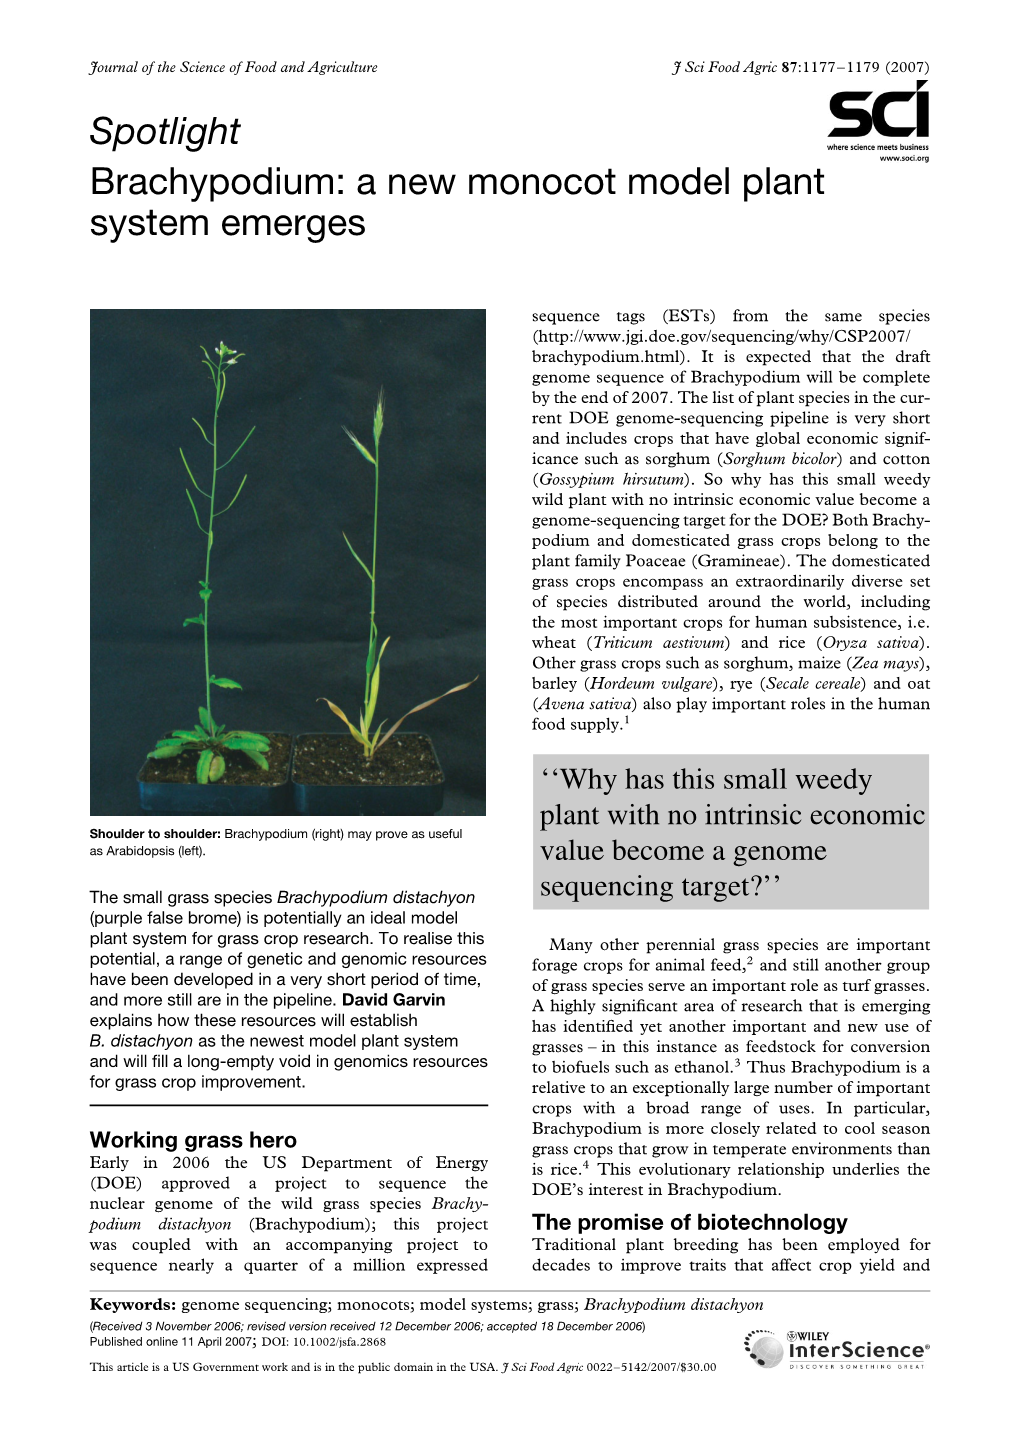 Brachypodium: a New Monocot Model Plant System Emerges